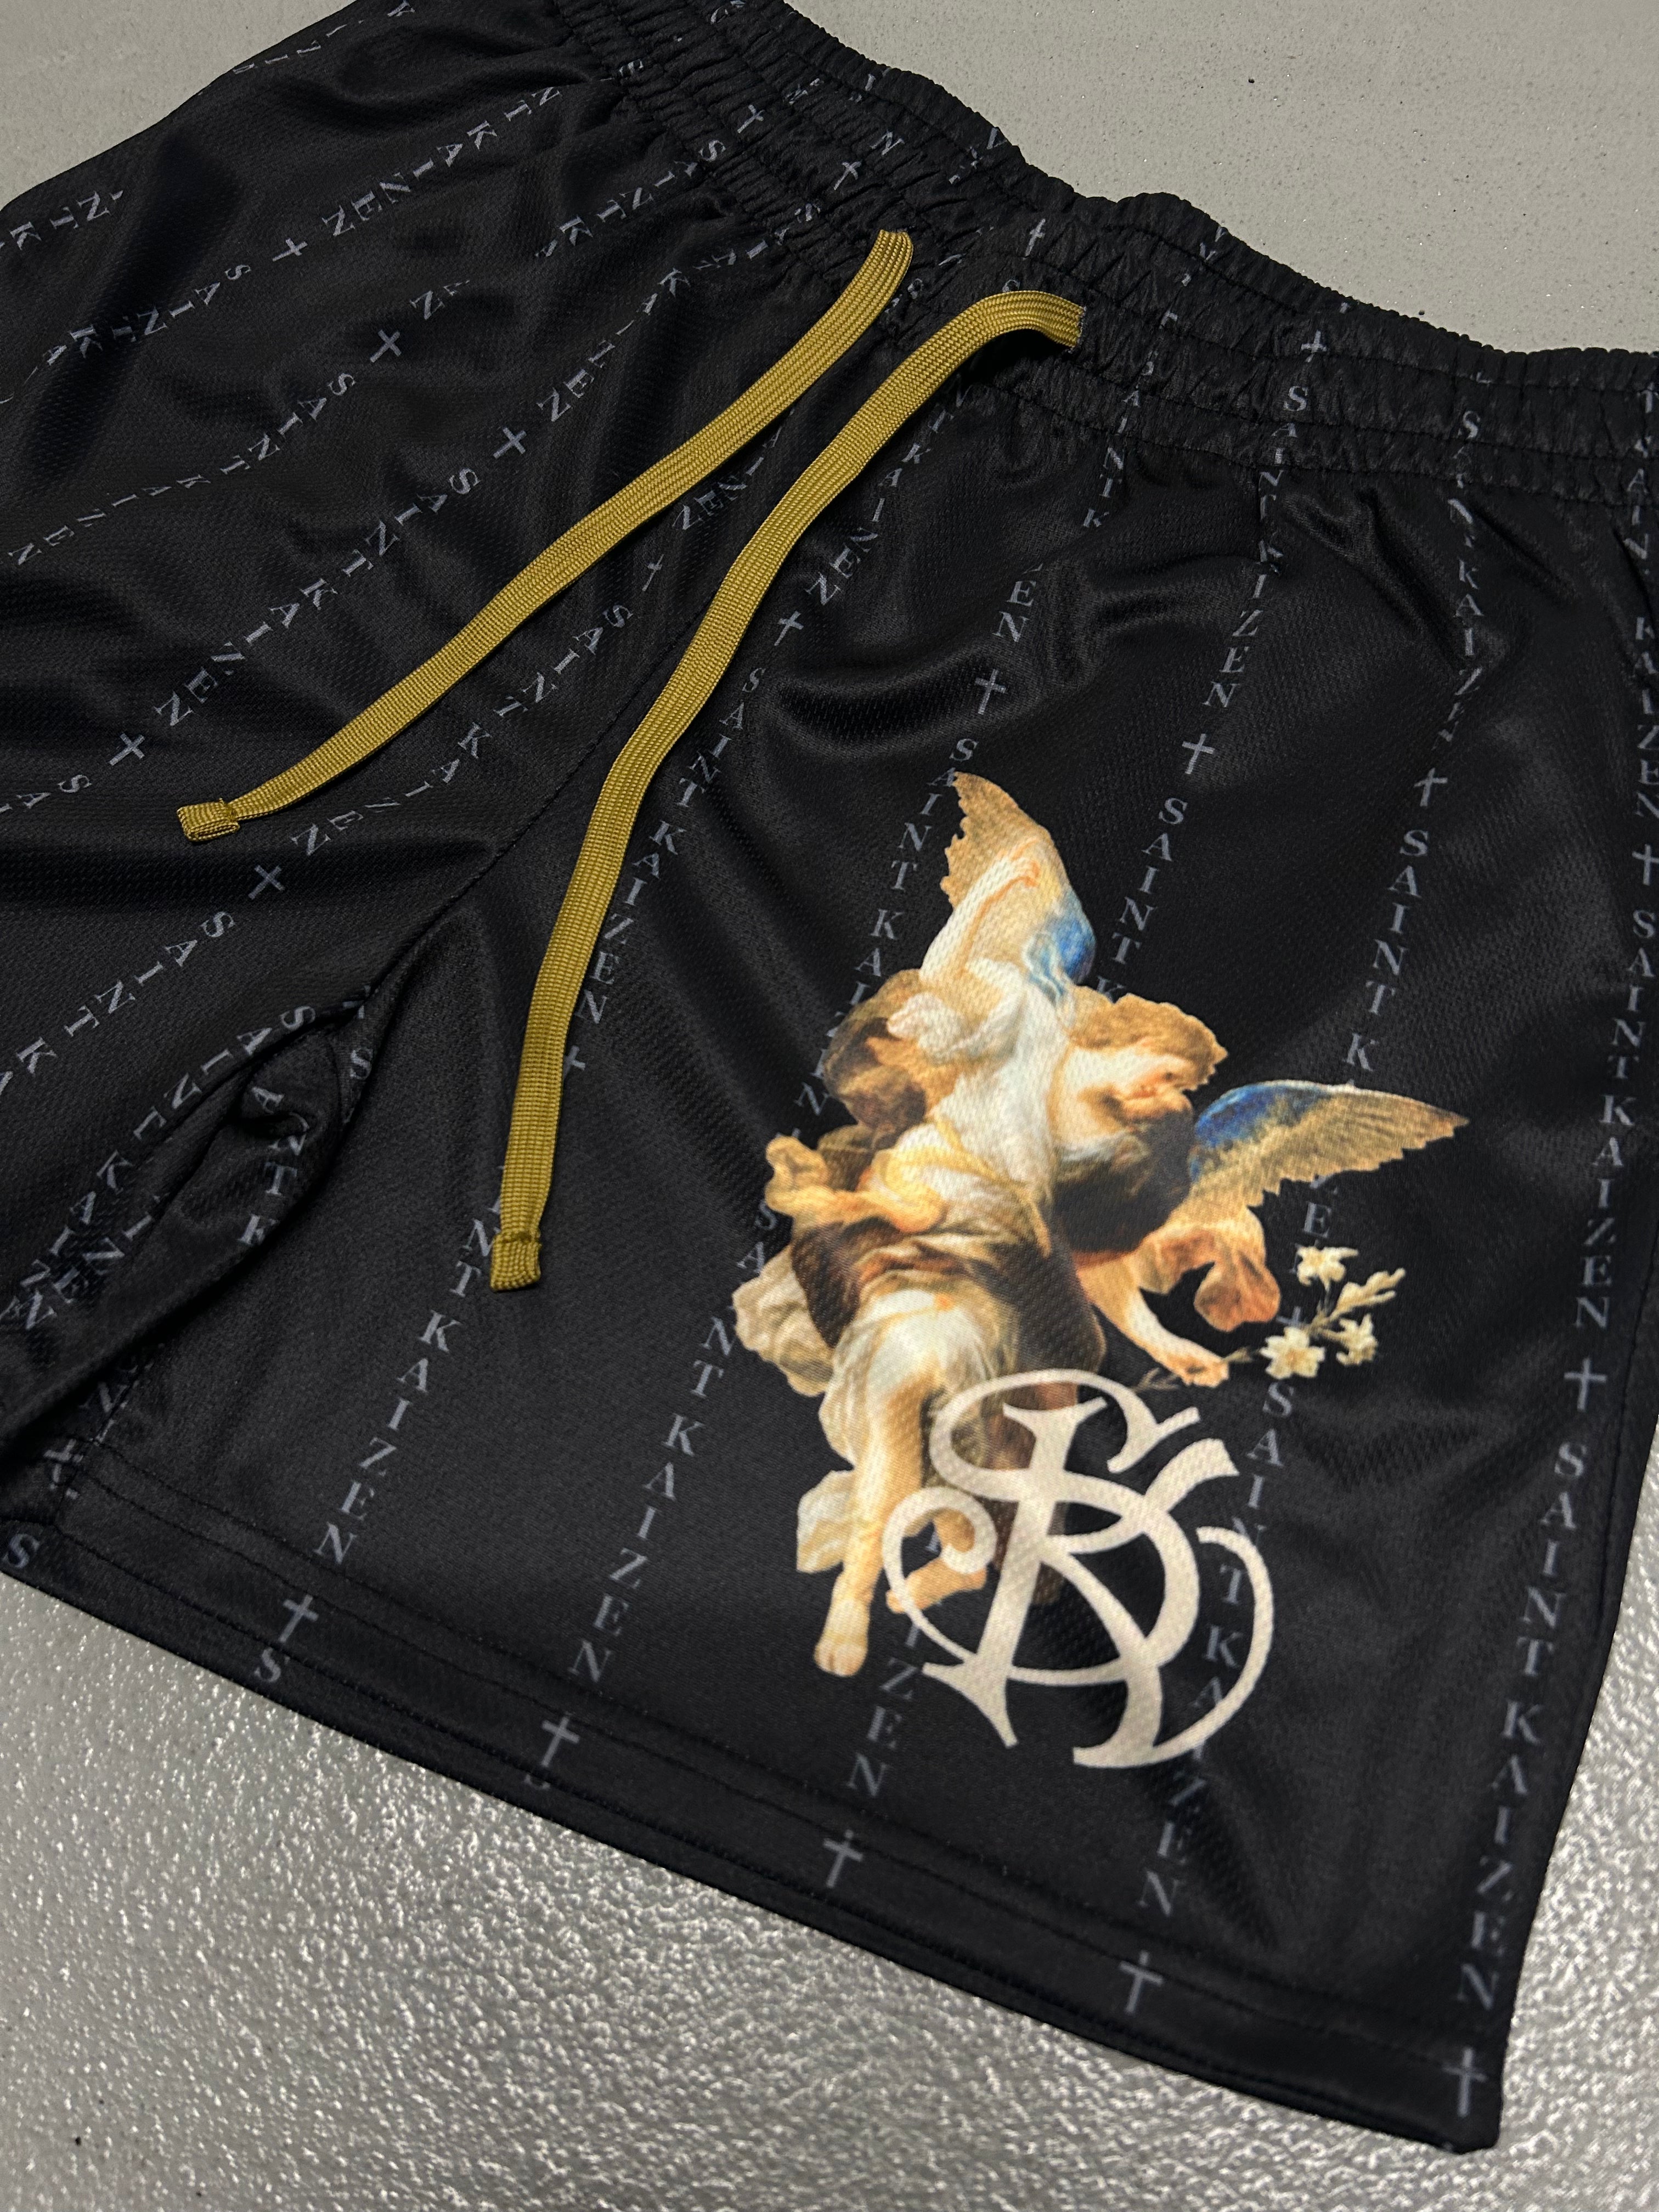 – Angel - Kaizen Black Saint Gold Shorts